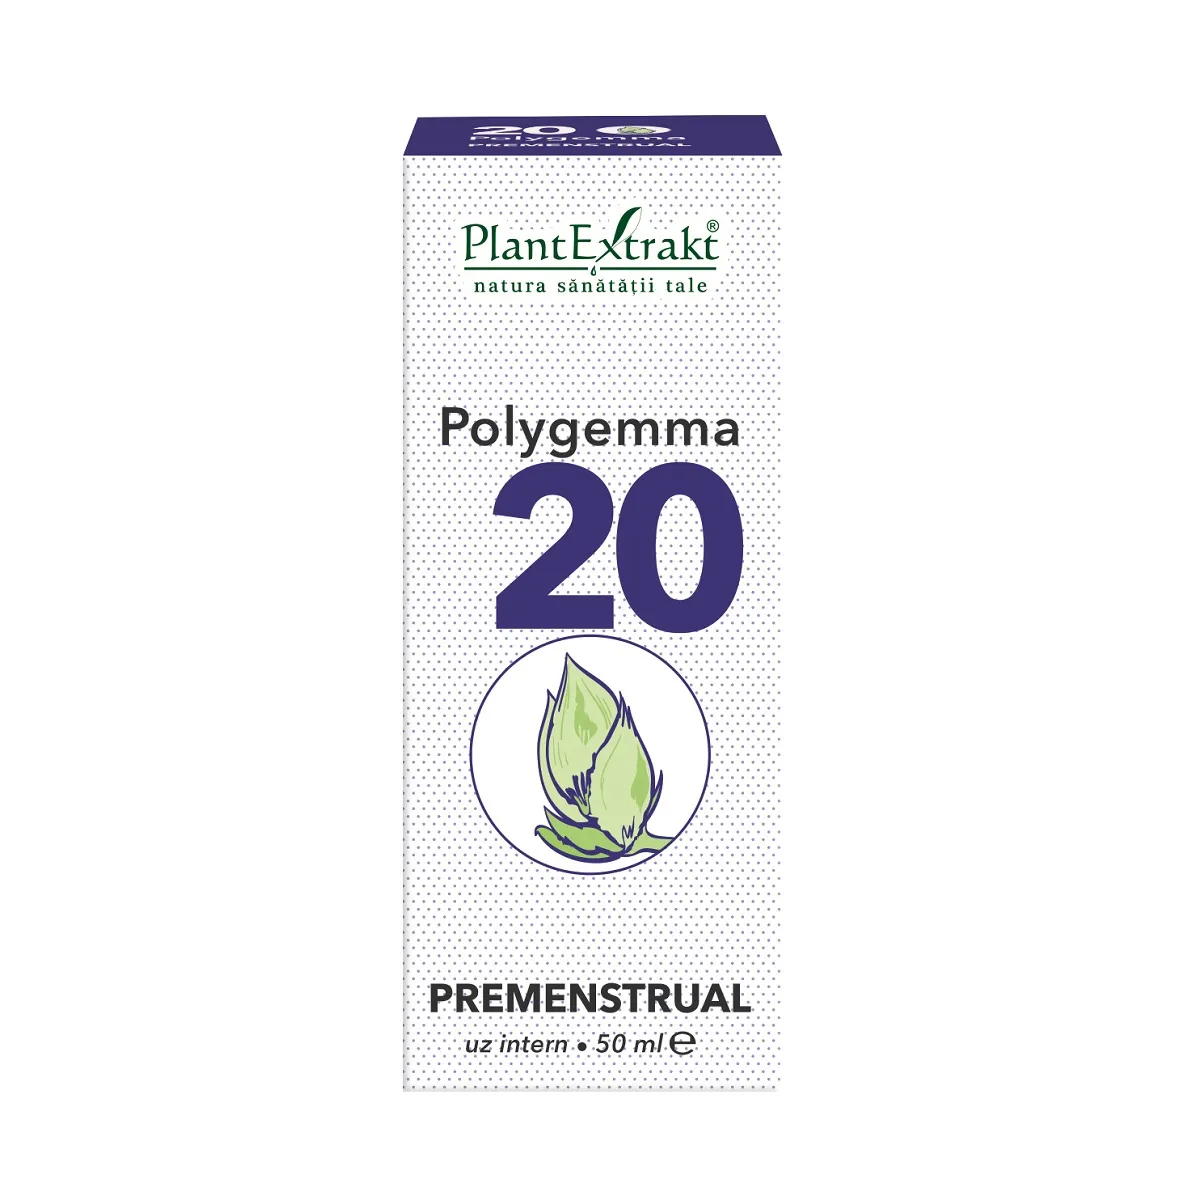 Polygemma 20 Premenstrual, 50ml, PlantExtrakt